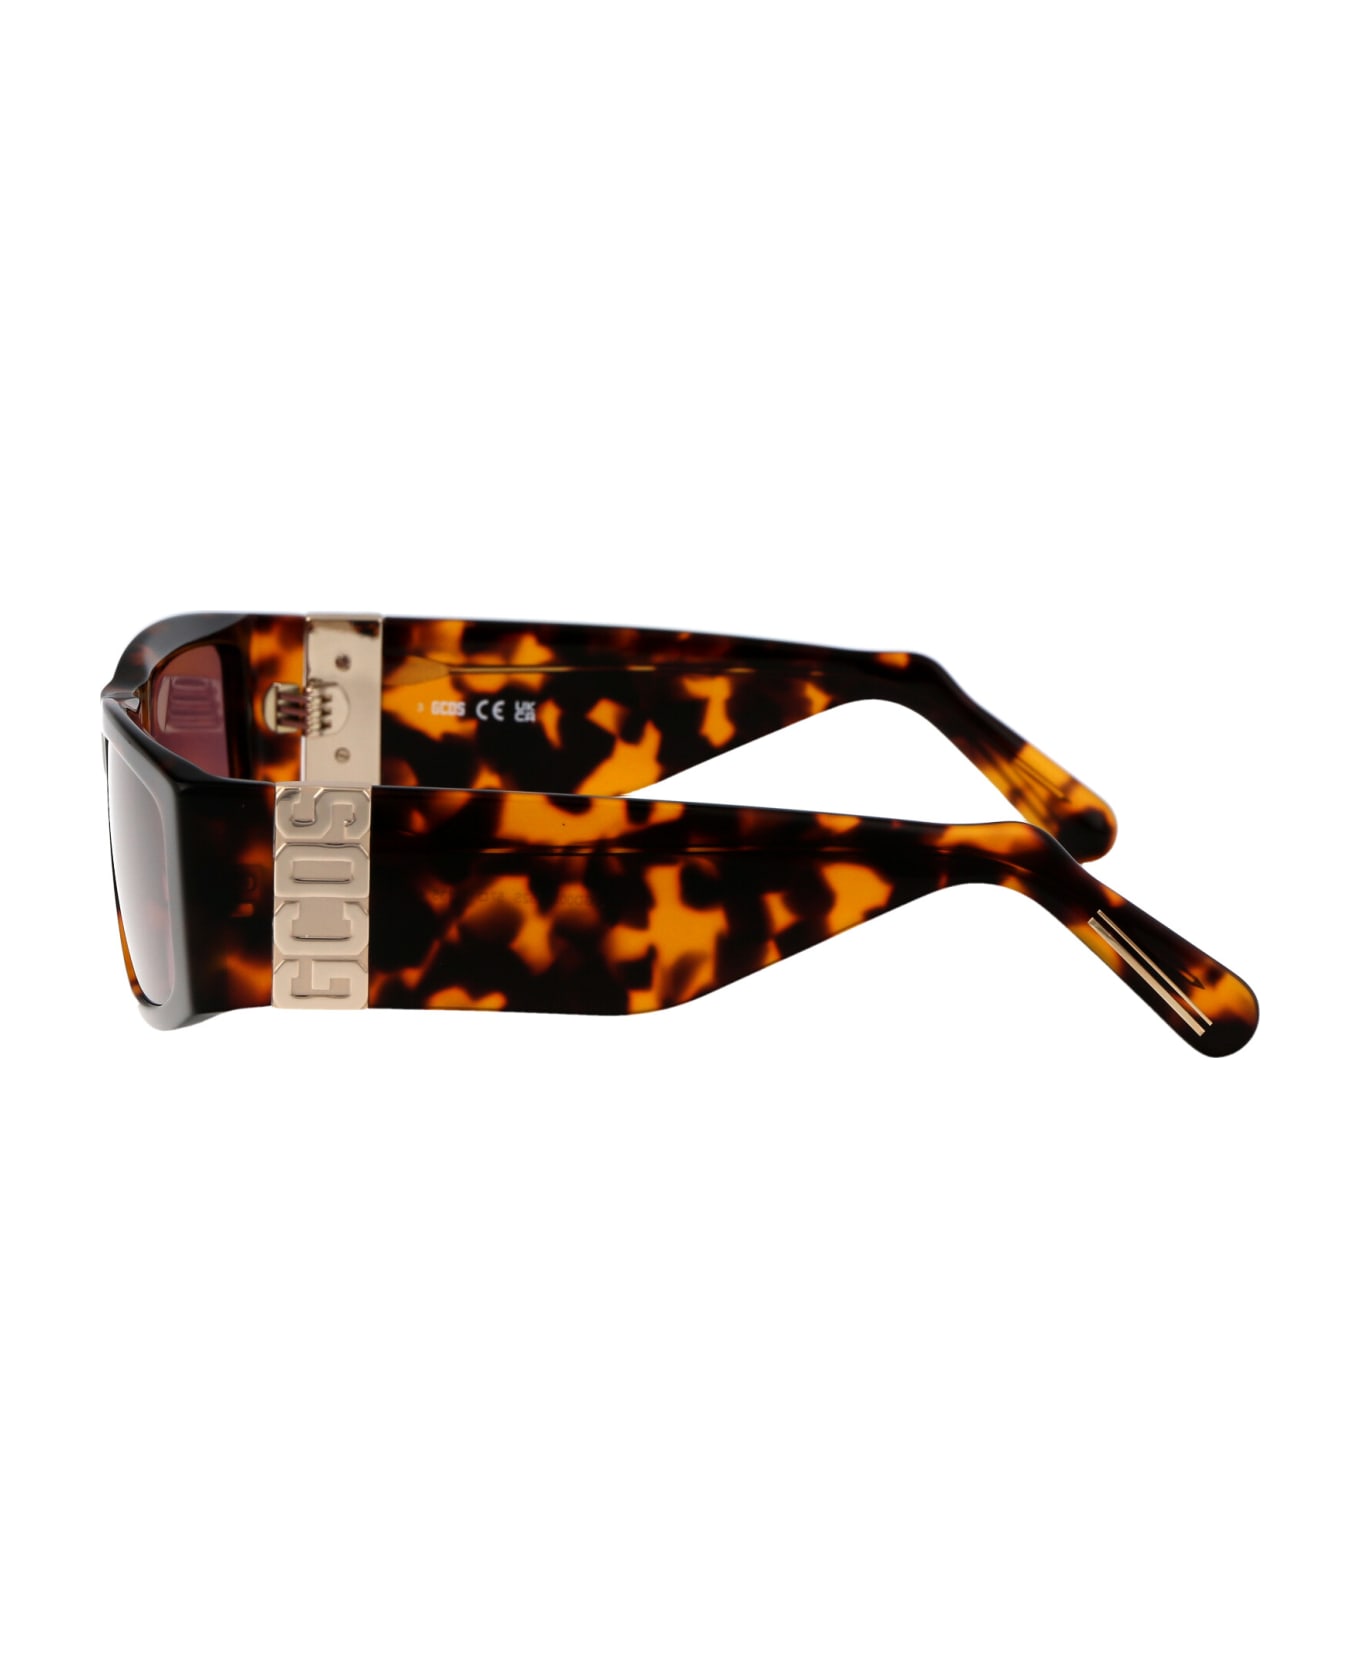 GCDS Gd0037 Sunglasses - 52S Avana Scura/Bordeaux